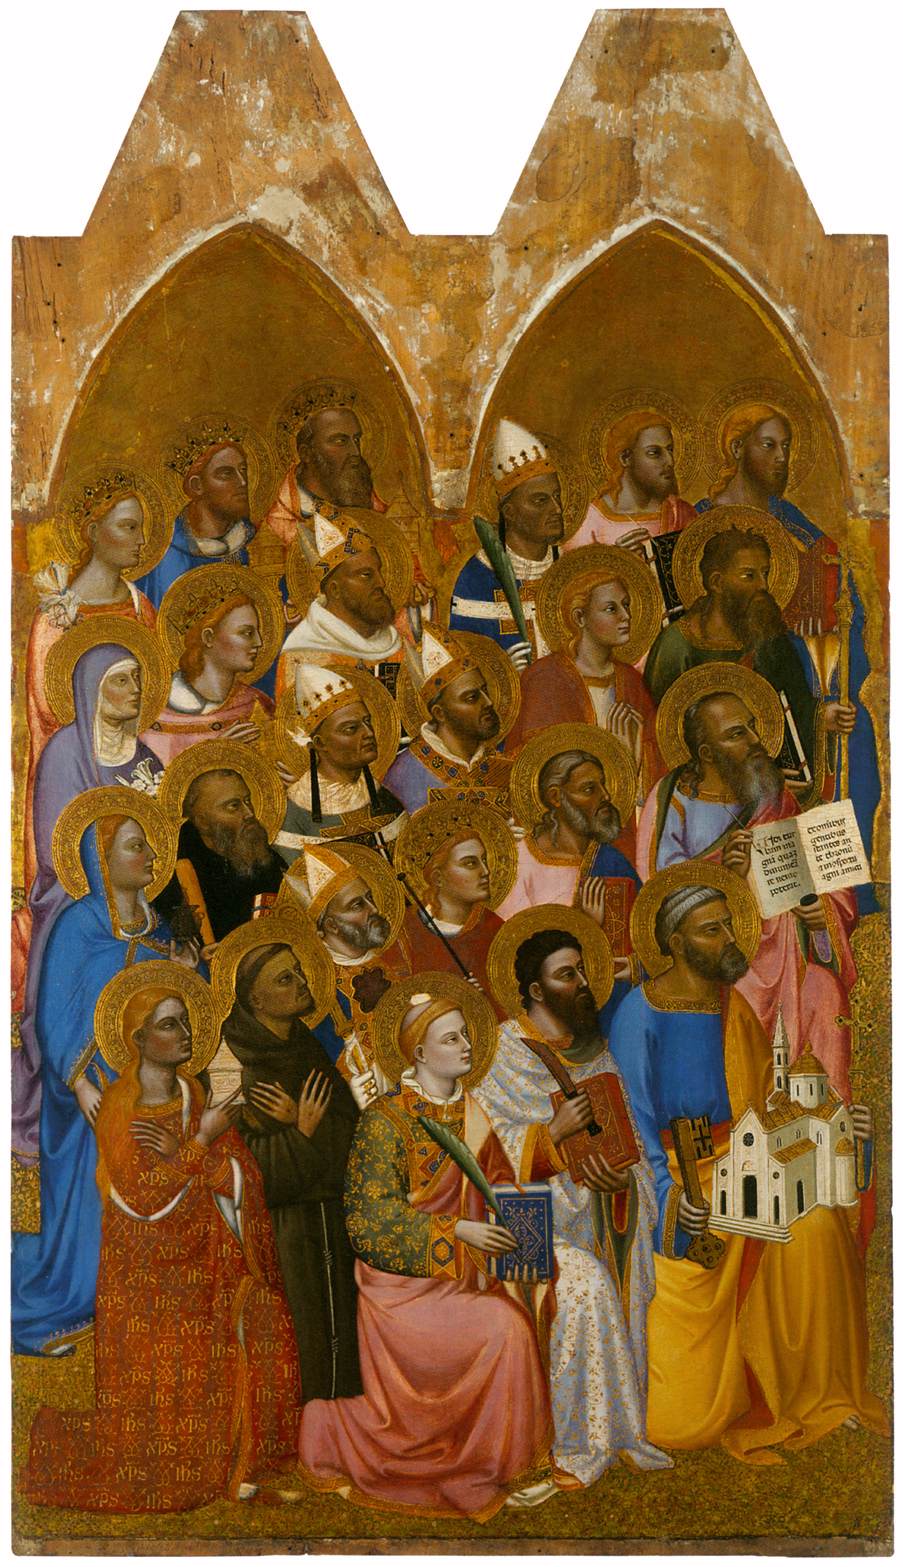 Altarpiece of San Pier Maggiore: The Saints Adoring